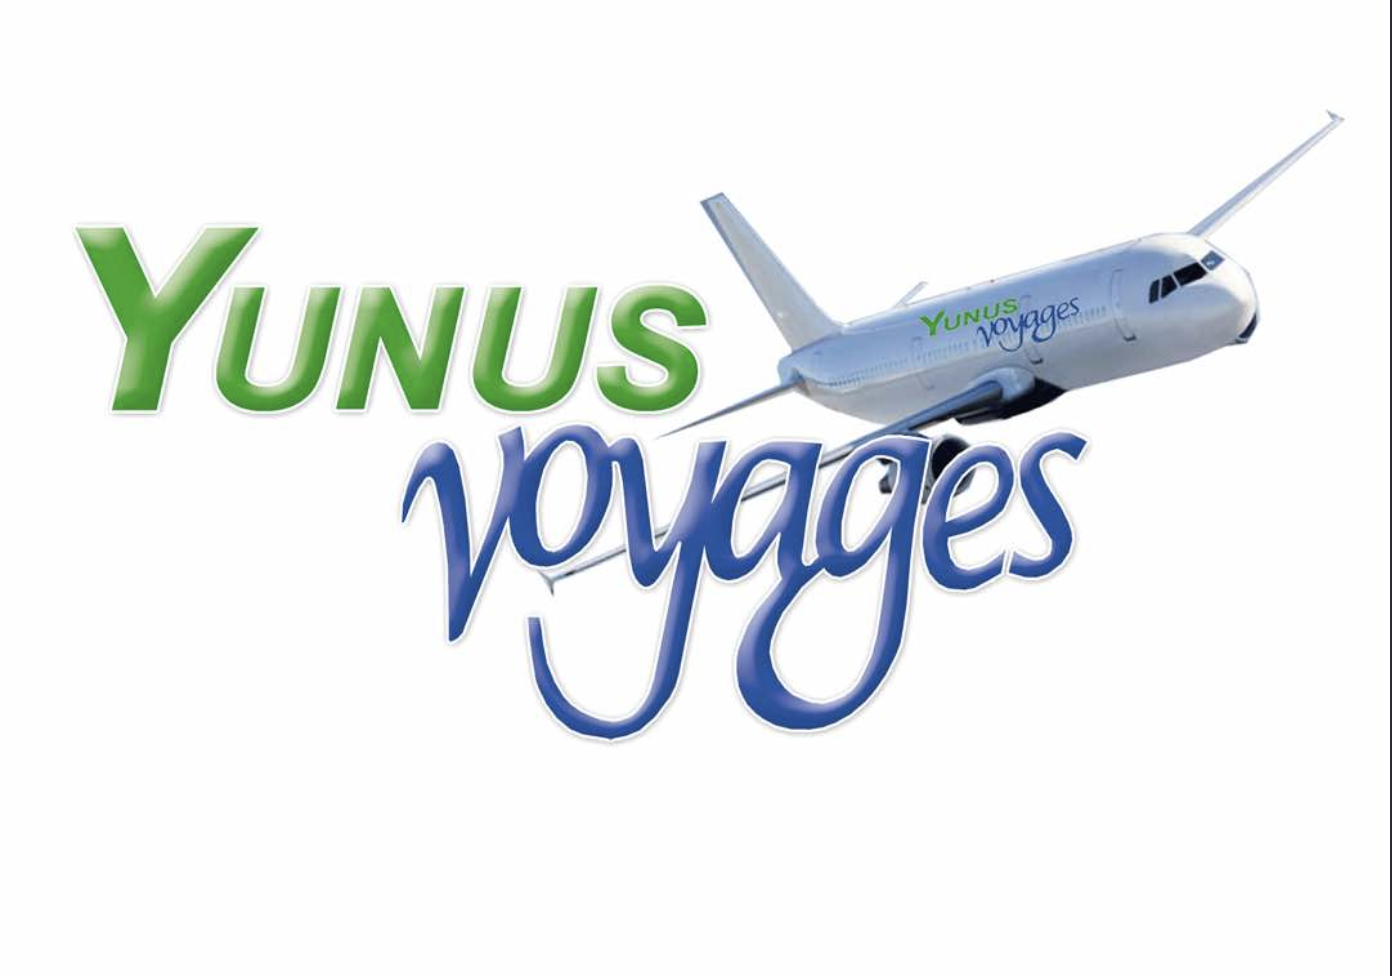 Yunus voyages